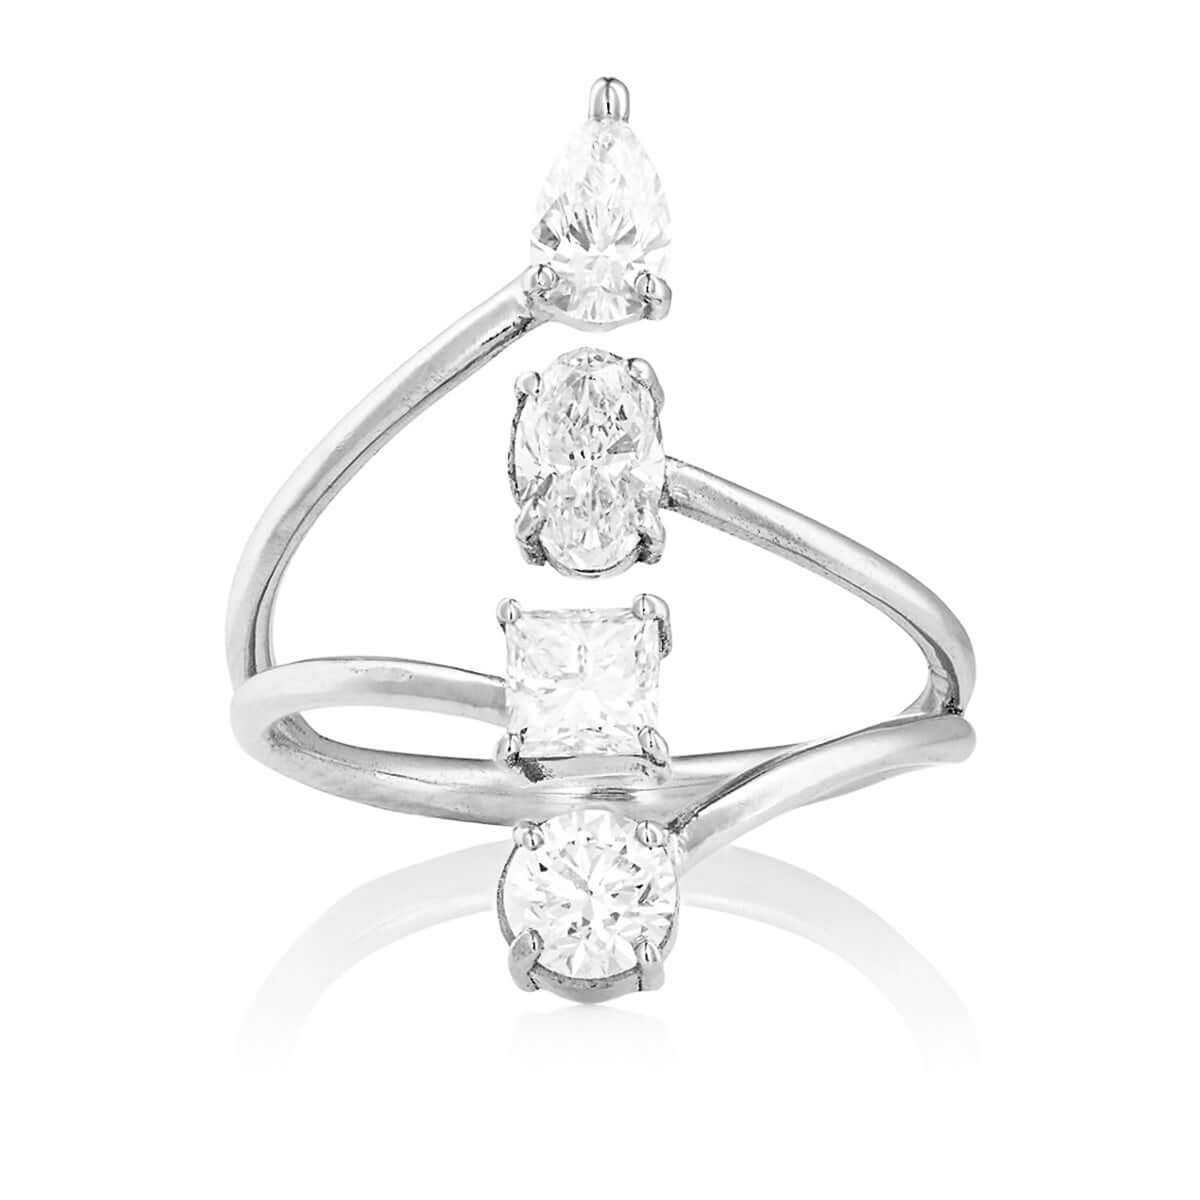 Diamond End Ring - Deco - Ileana Makri store